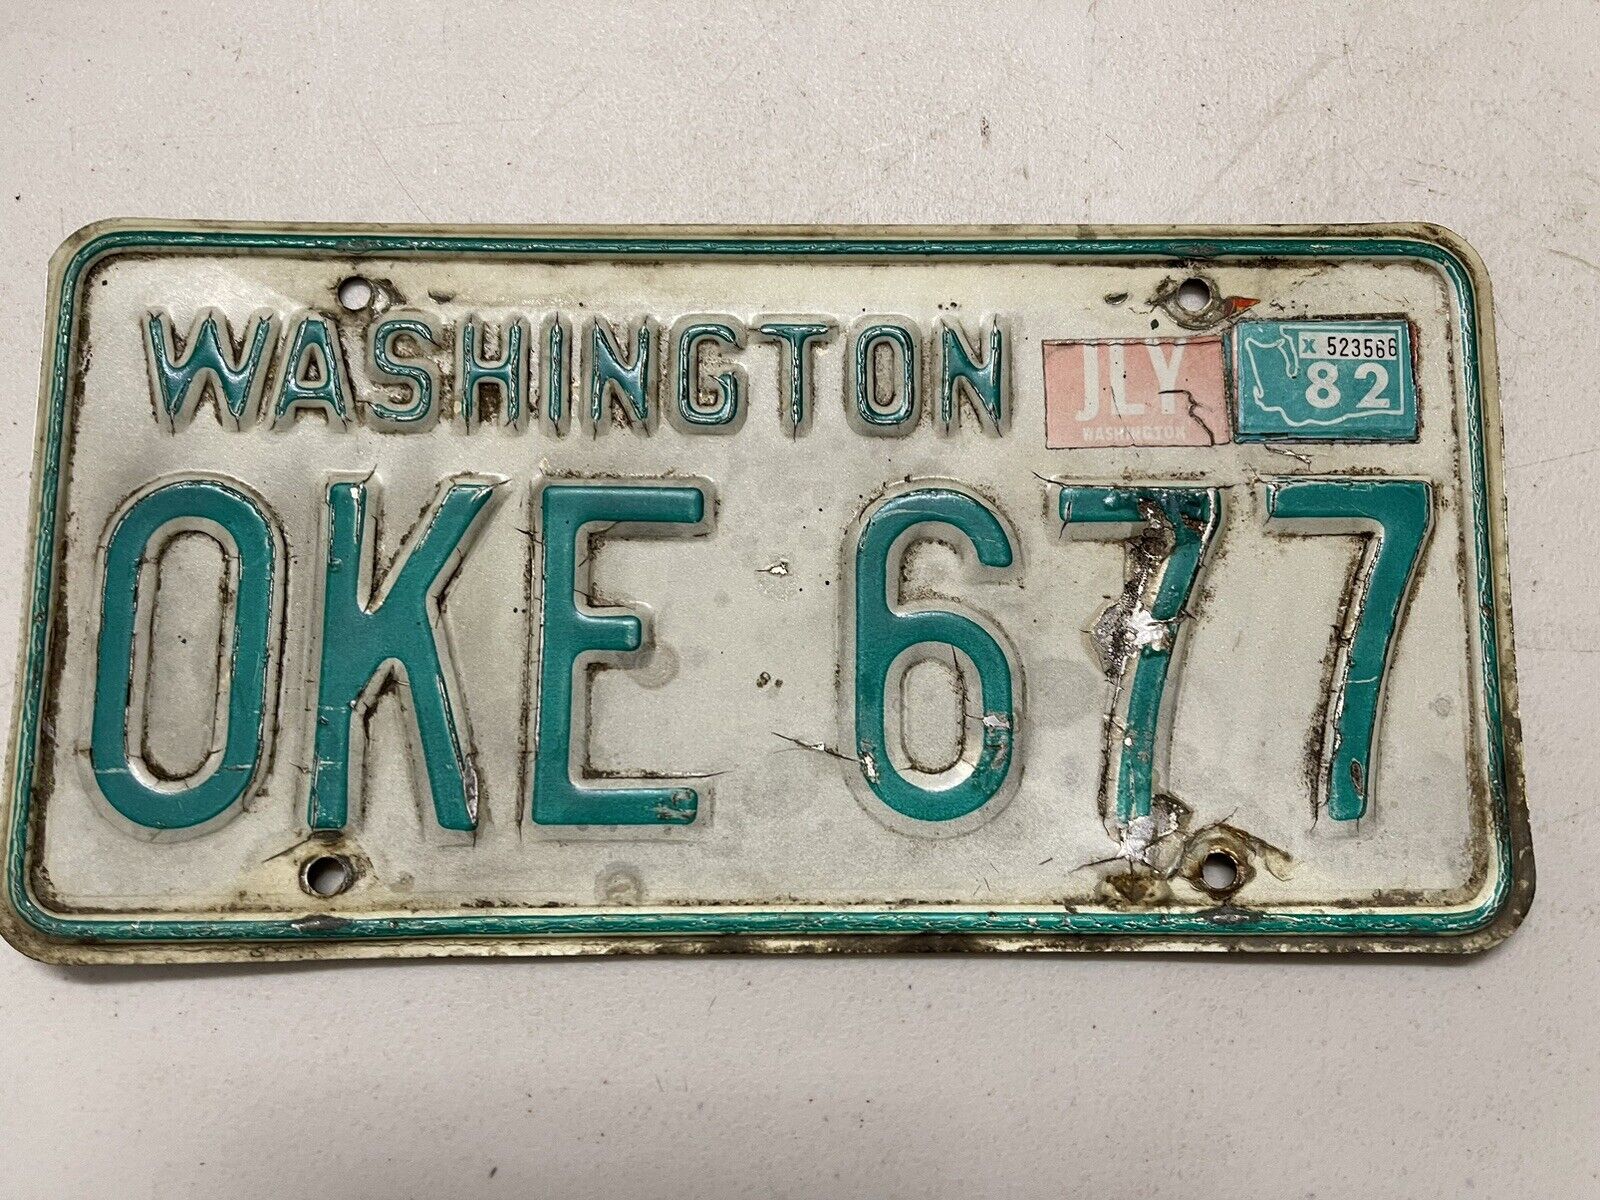 1968 to 1982 Washington State License Plate YOM Single Early King County OKE 677